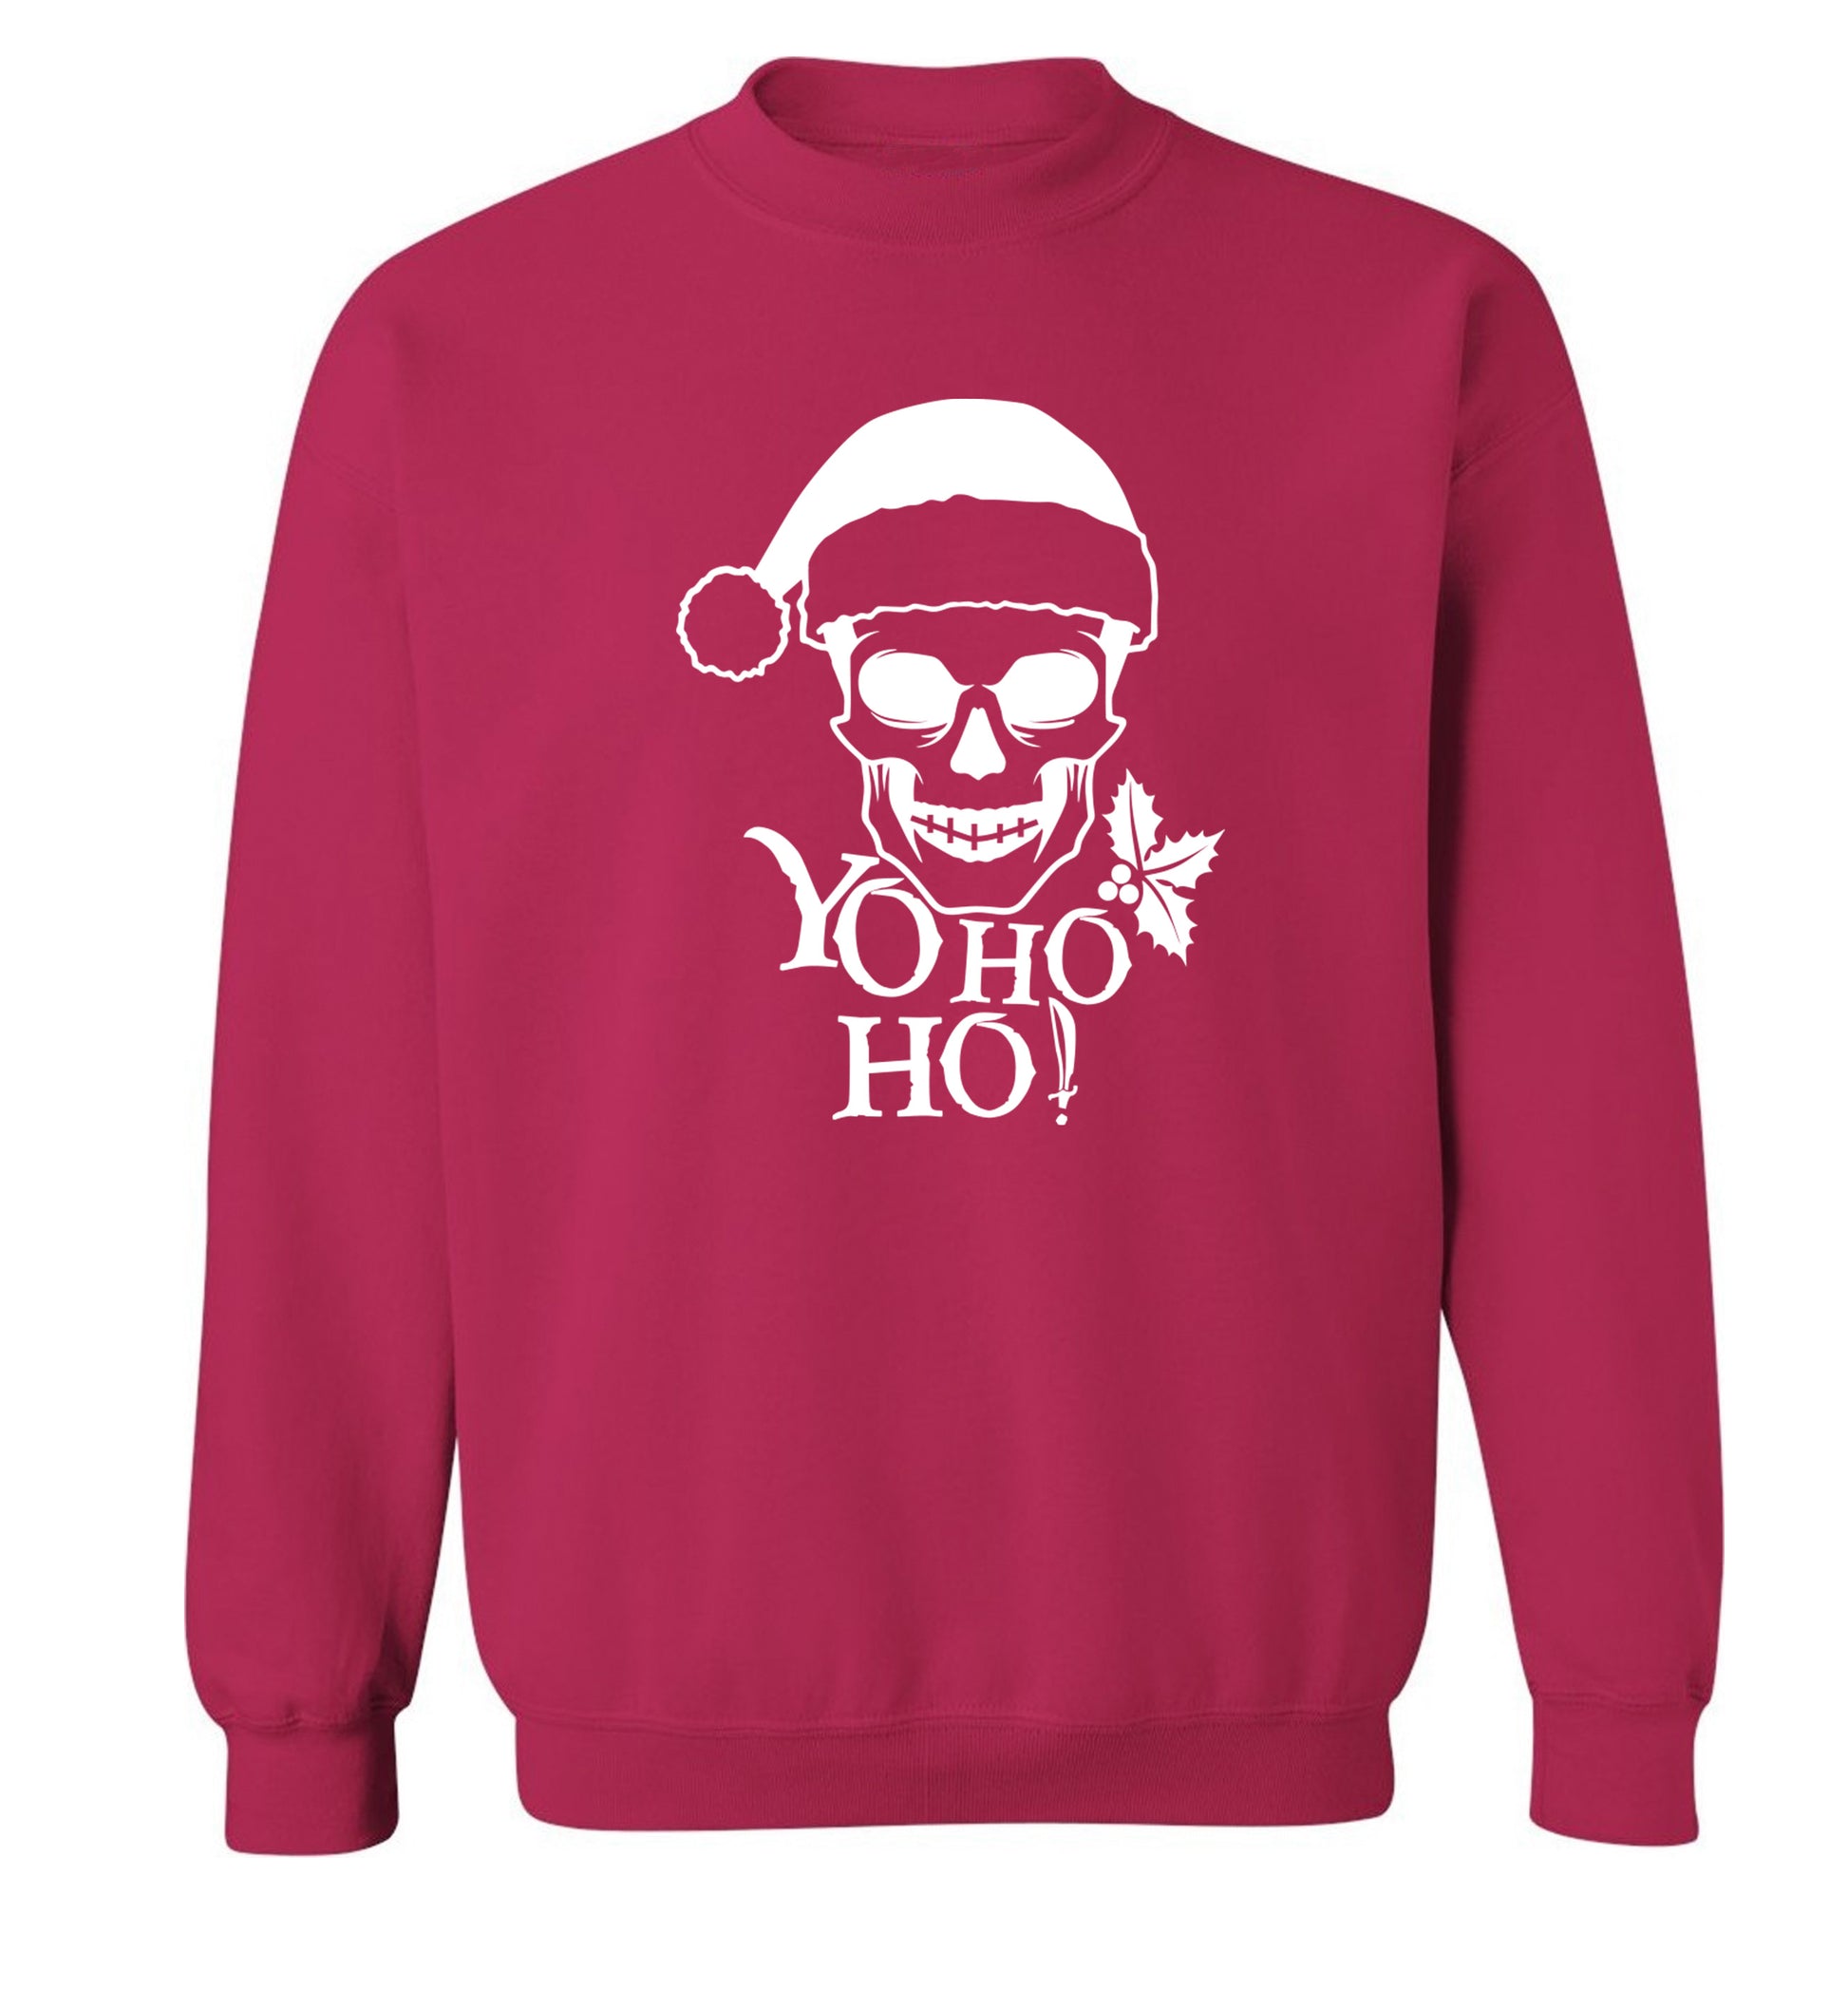 Yo ho ho! Adult's unisex pink Sweater 2XL